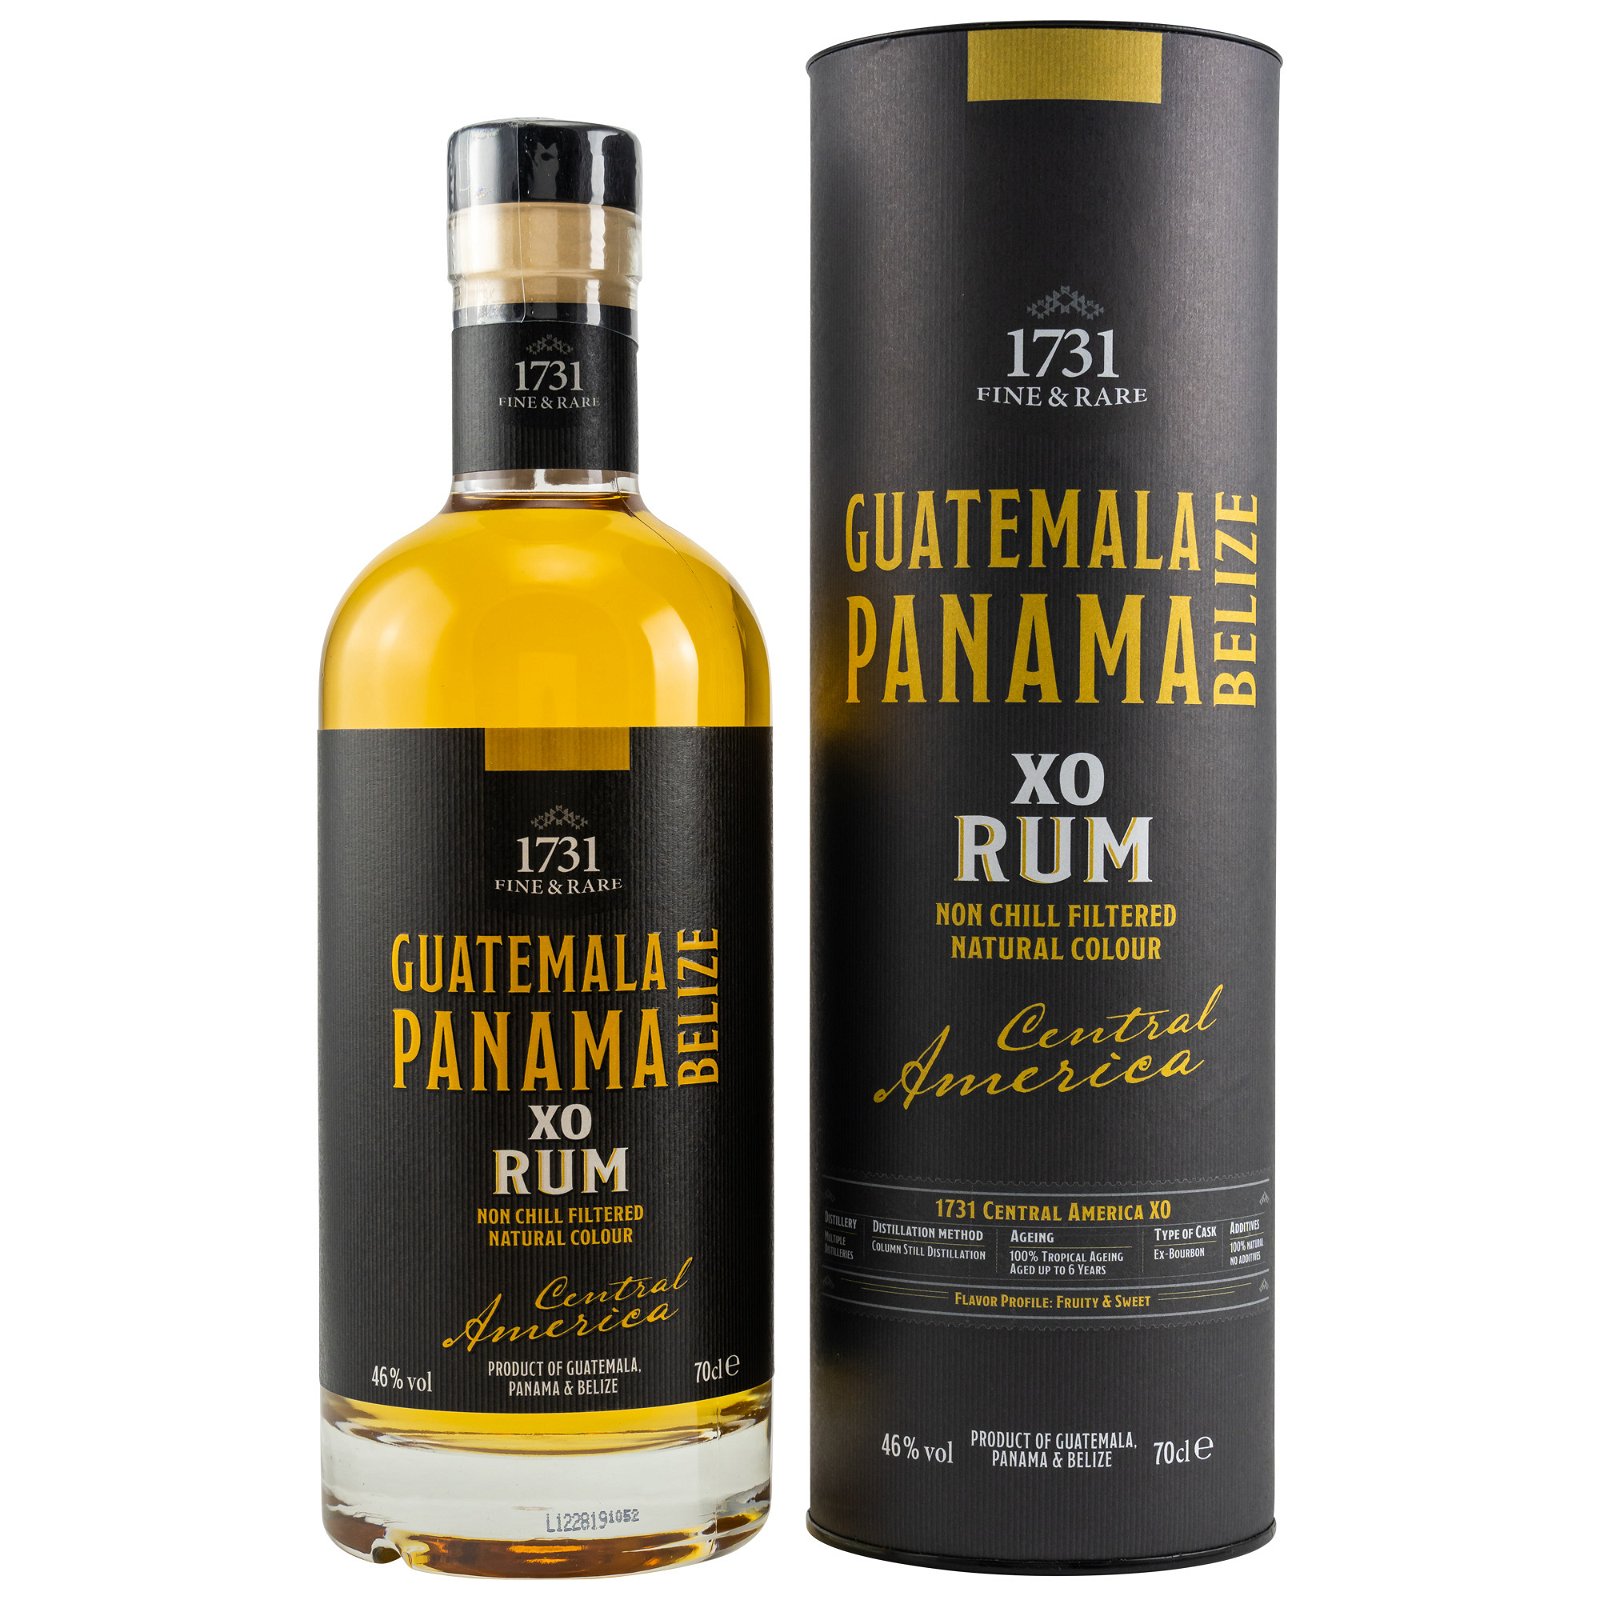 1731 Central America XO Rum Guatemala - Panama - Belize